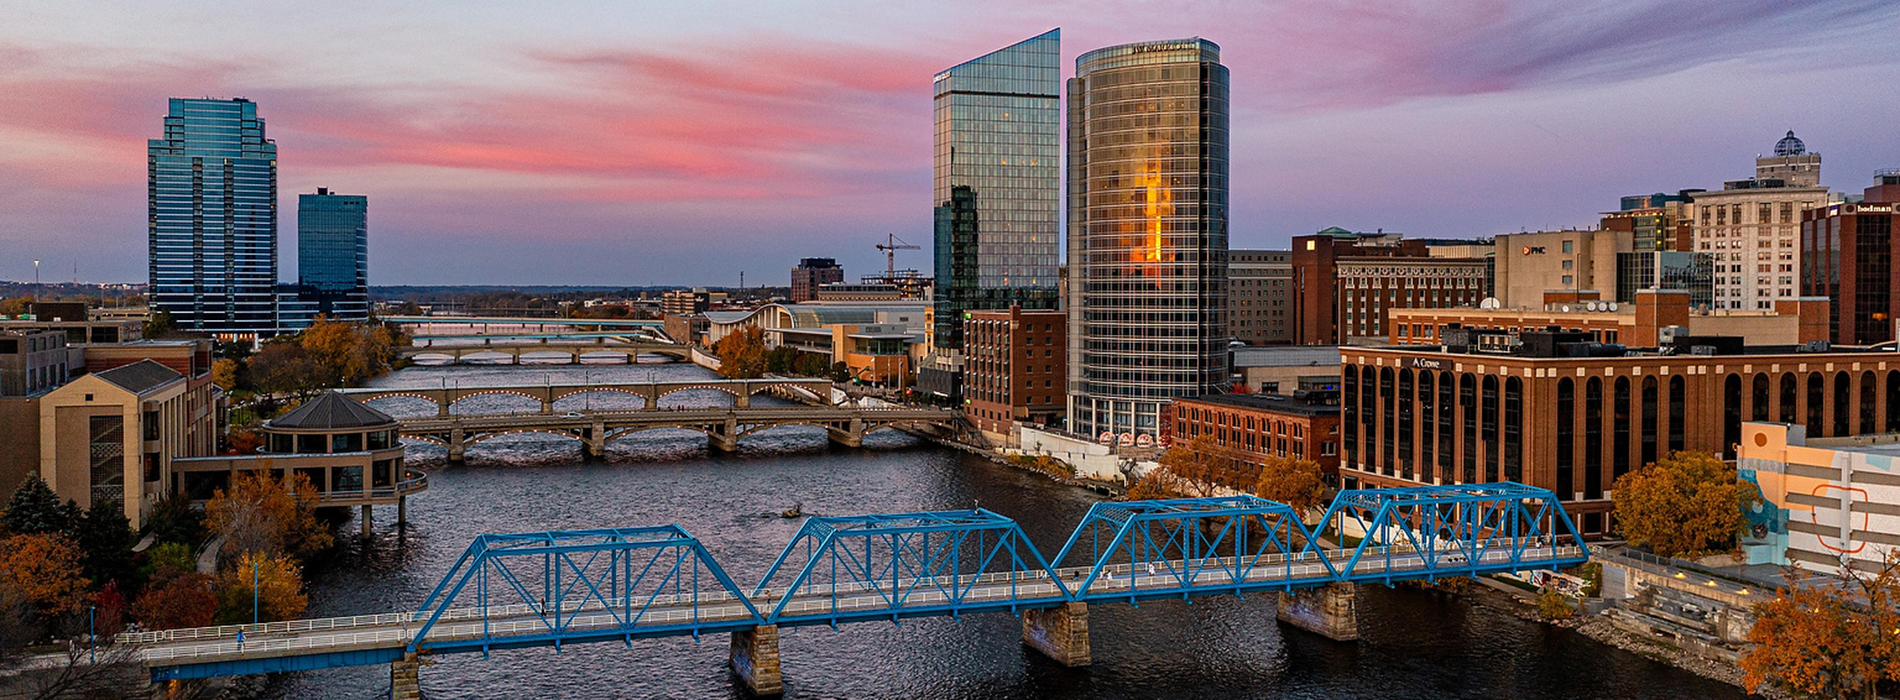 Night skyline and bridge view of Grand Rapids MI